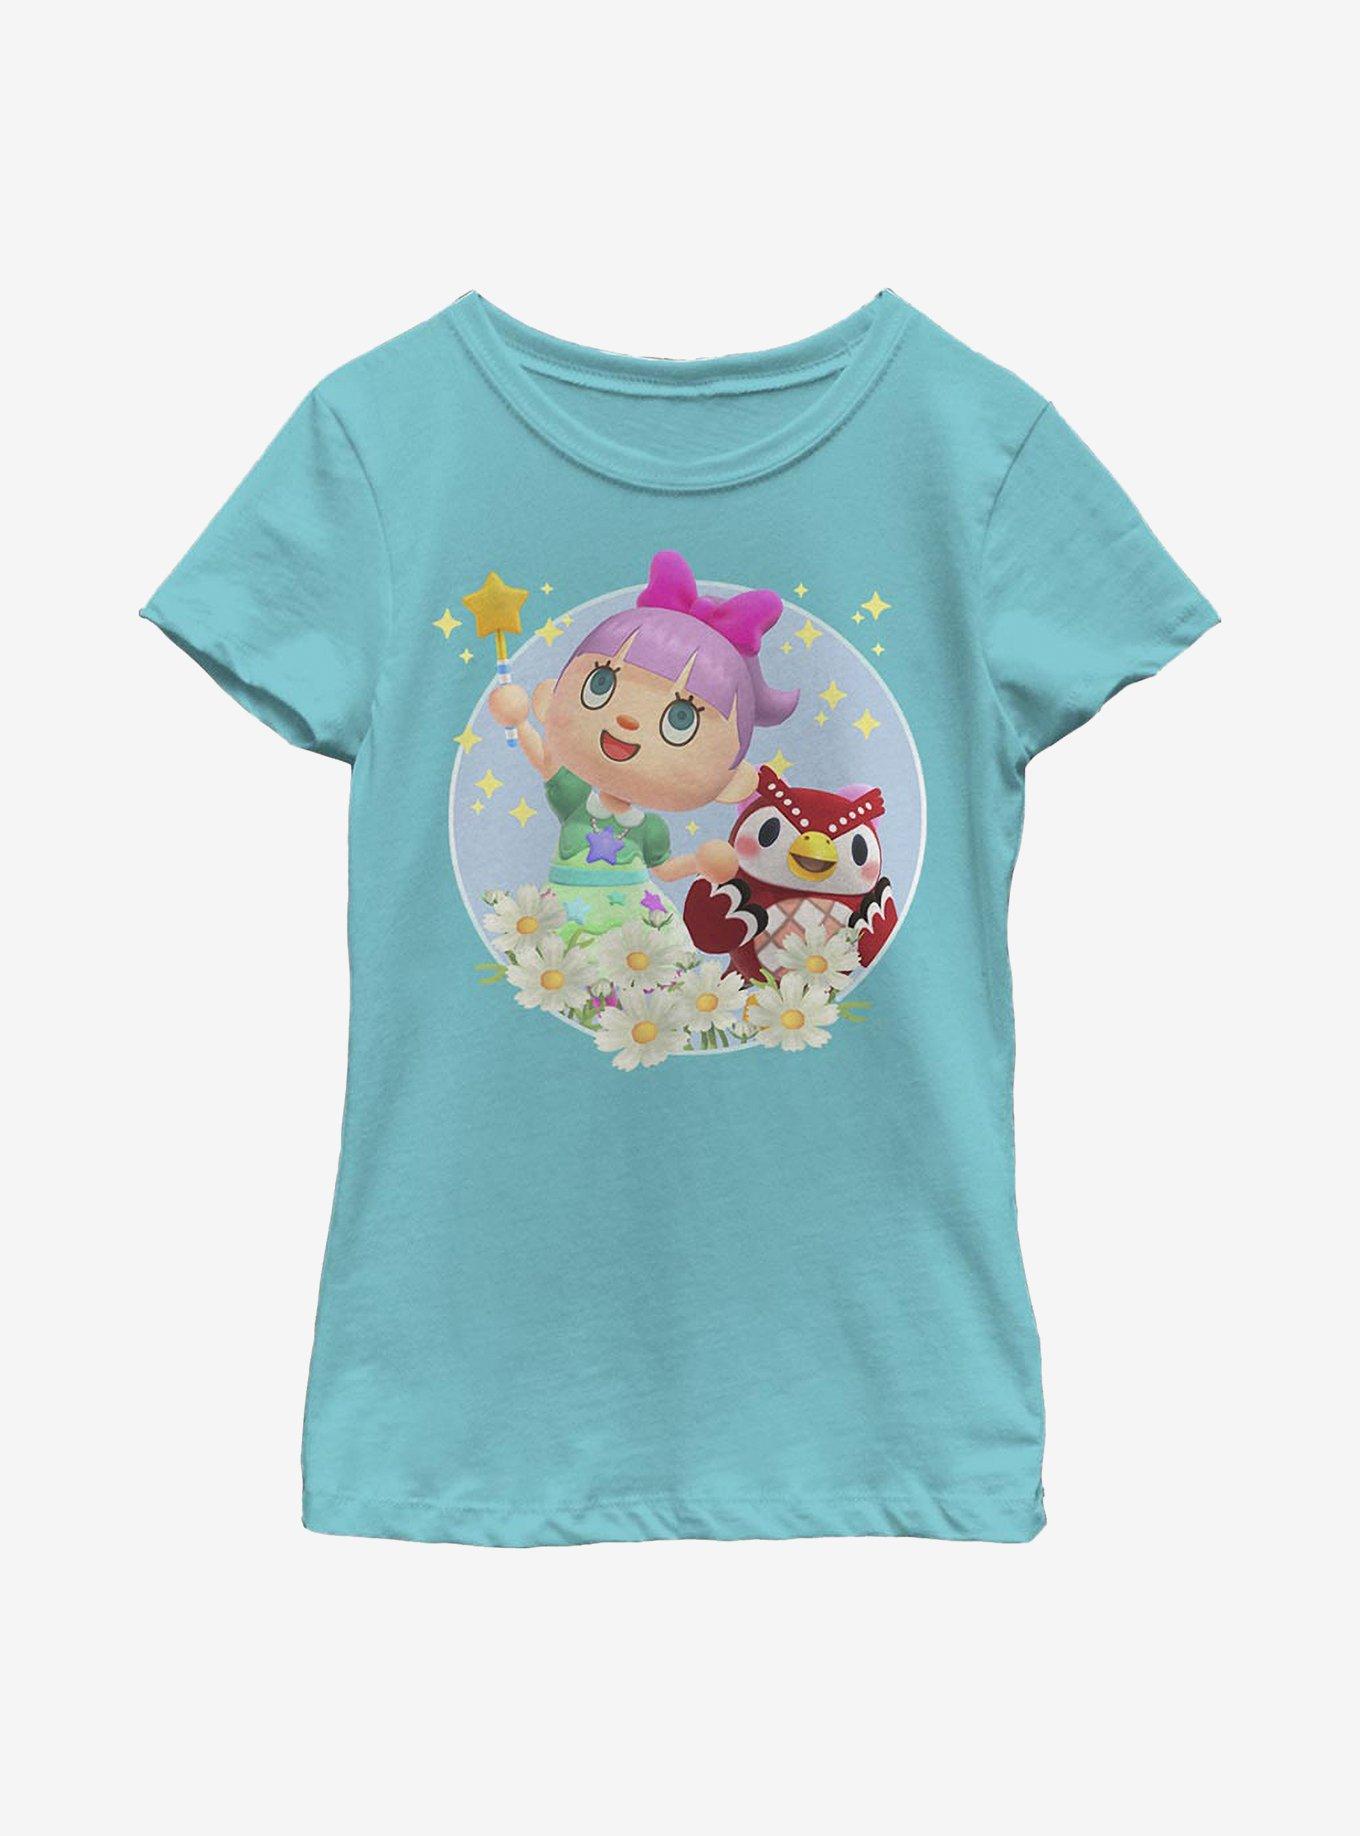 Animal Crossing: New Horizons Celeste Flowers Youth Girls T-Shirt